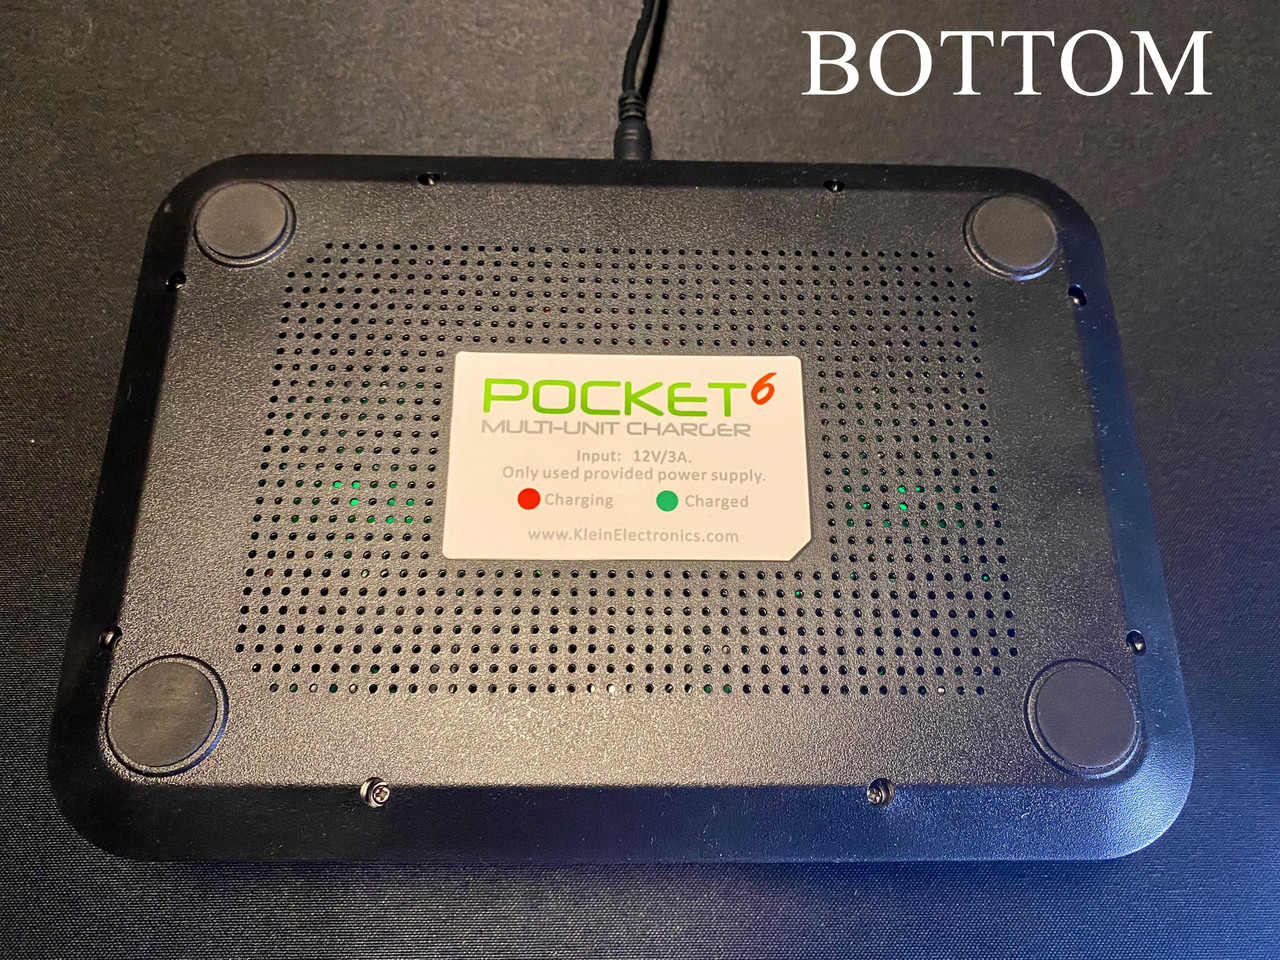 POCKET6 Multi-Unit Charger for Pocket+G3 [[product_type]] kleinelectronics.com 139.95